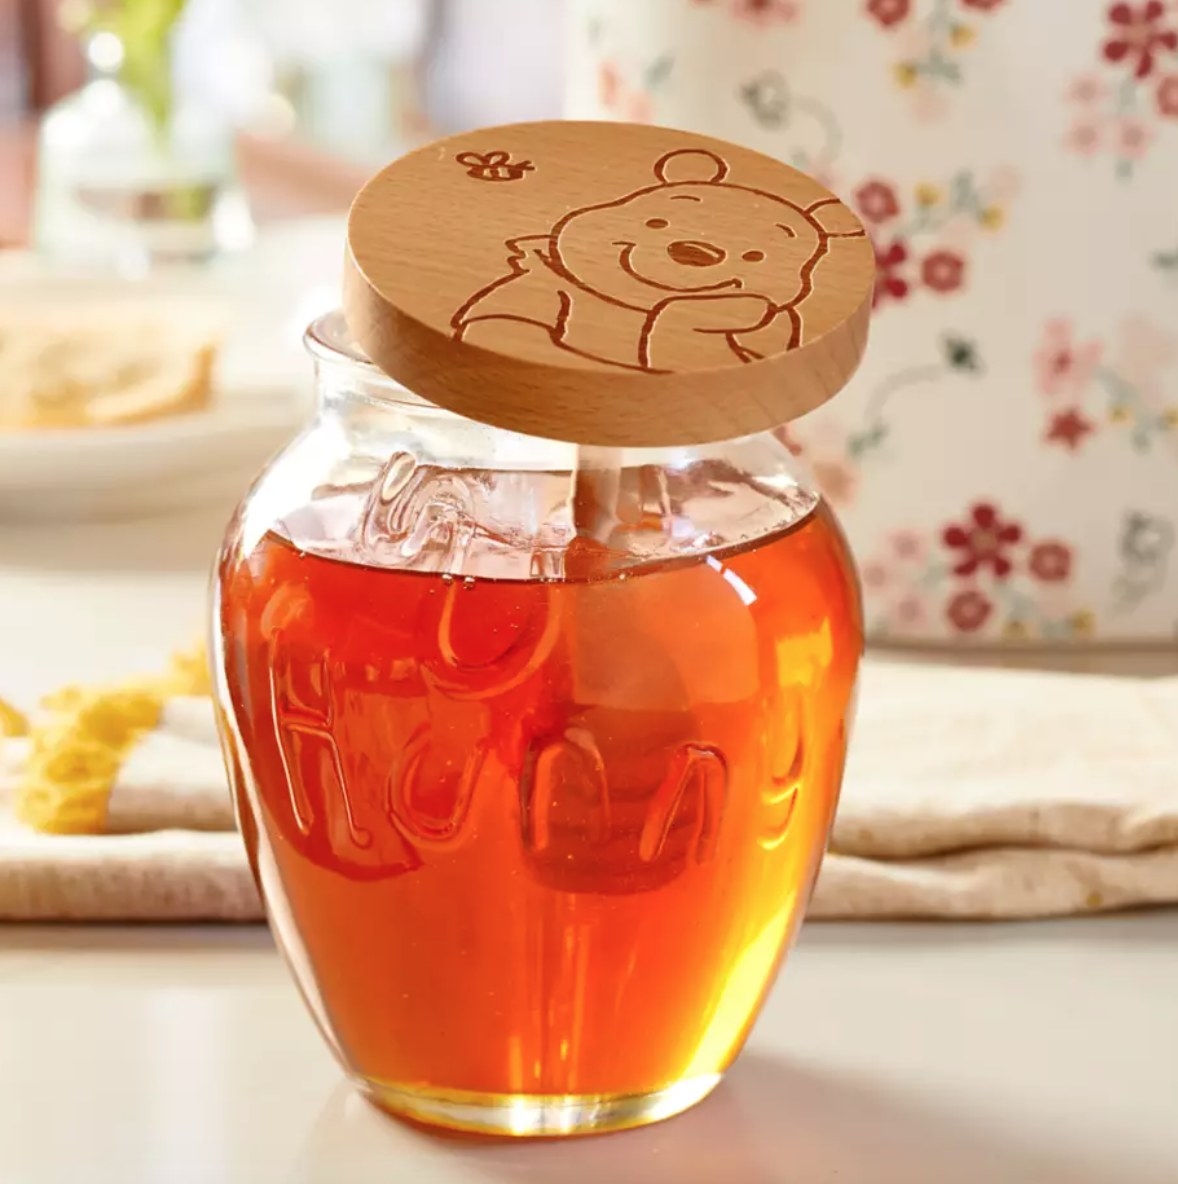 the glass honey jar